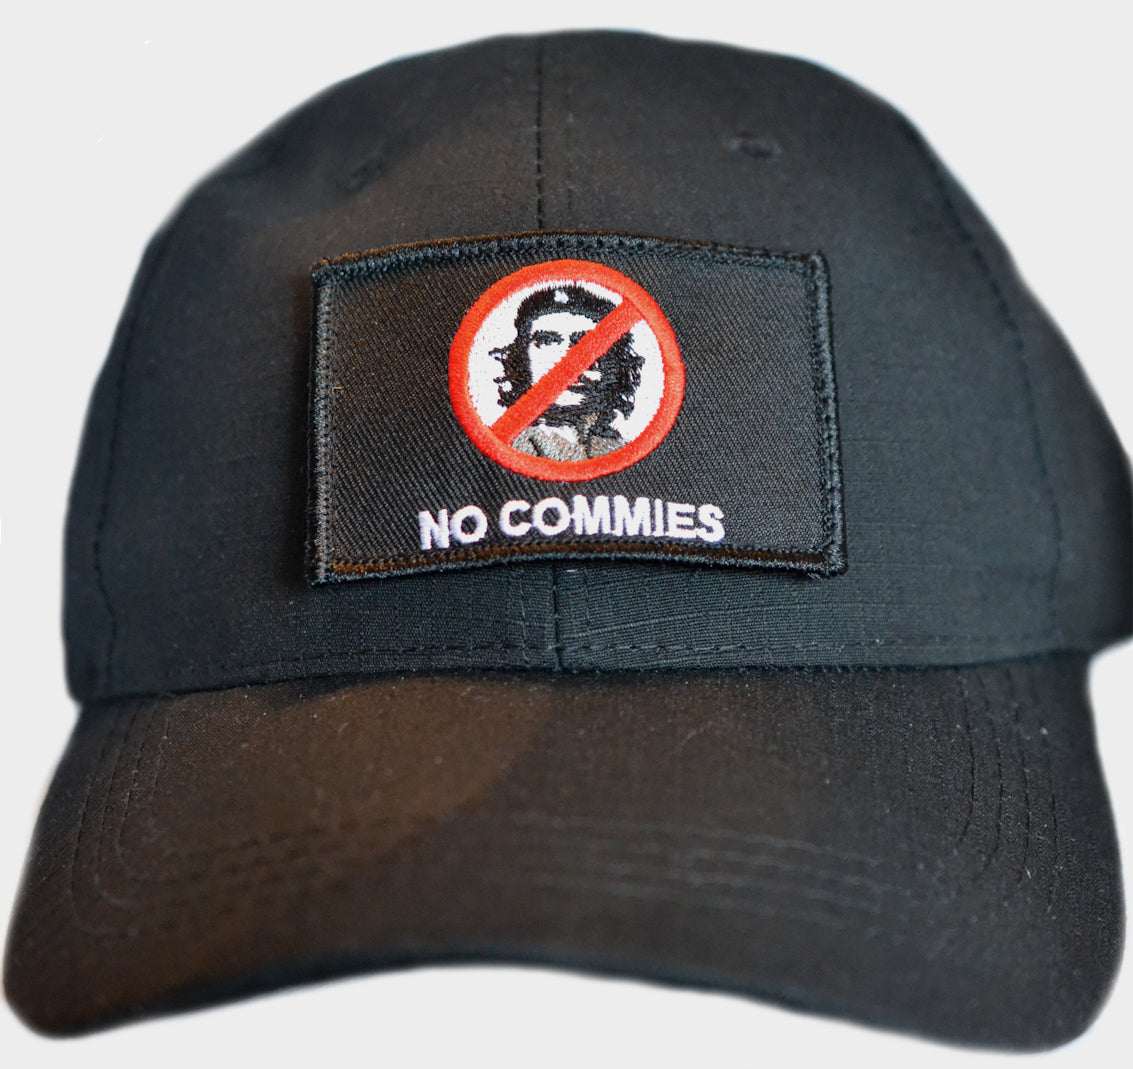 Hat - "No Commies" Anti-Che Guevara, Against Communism hat.